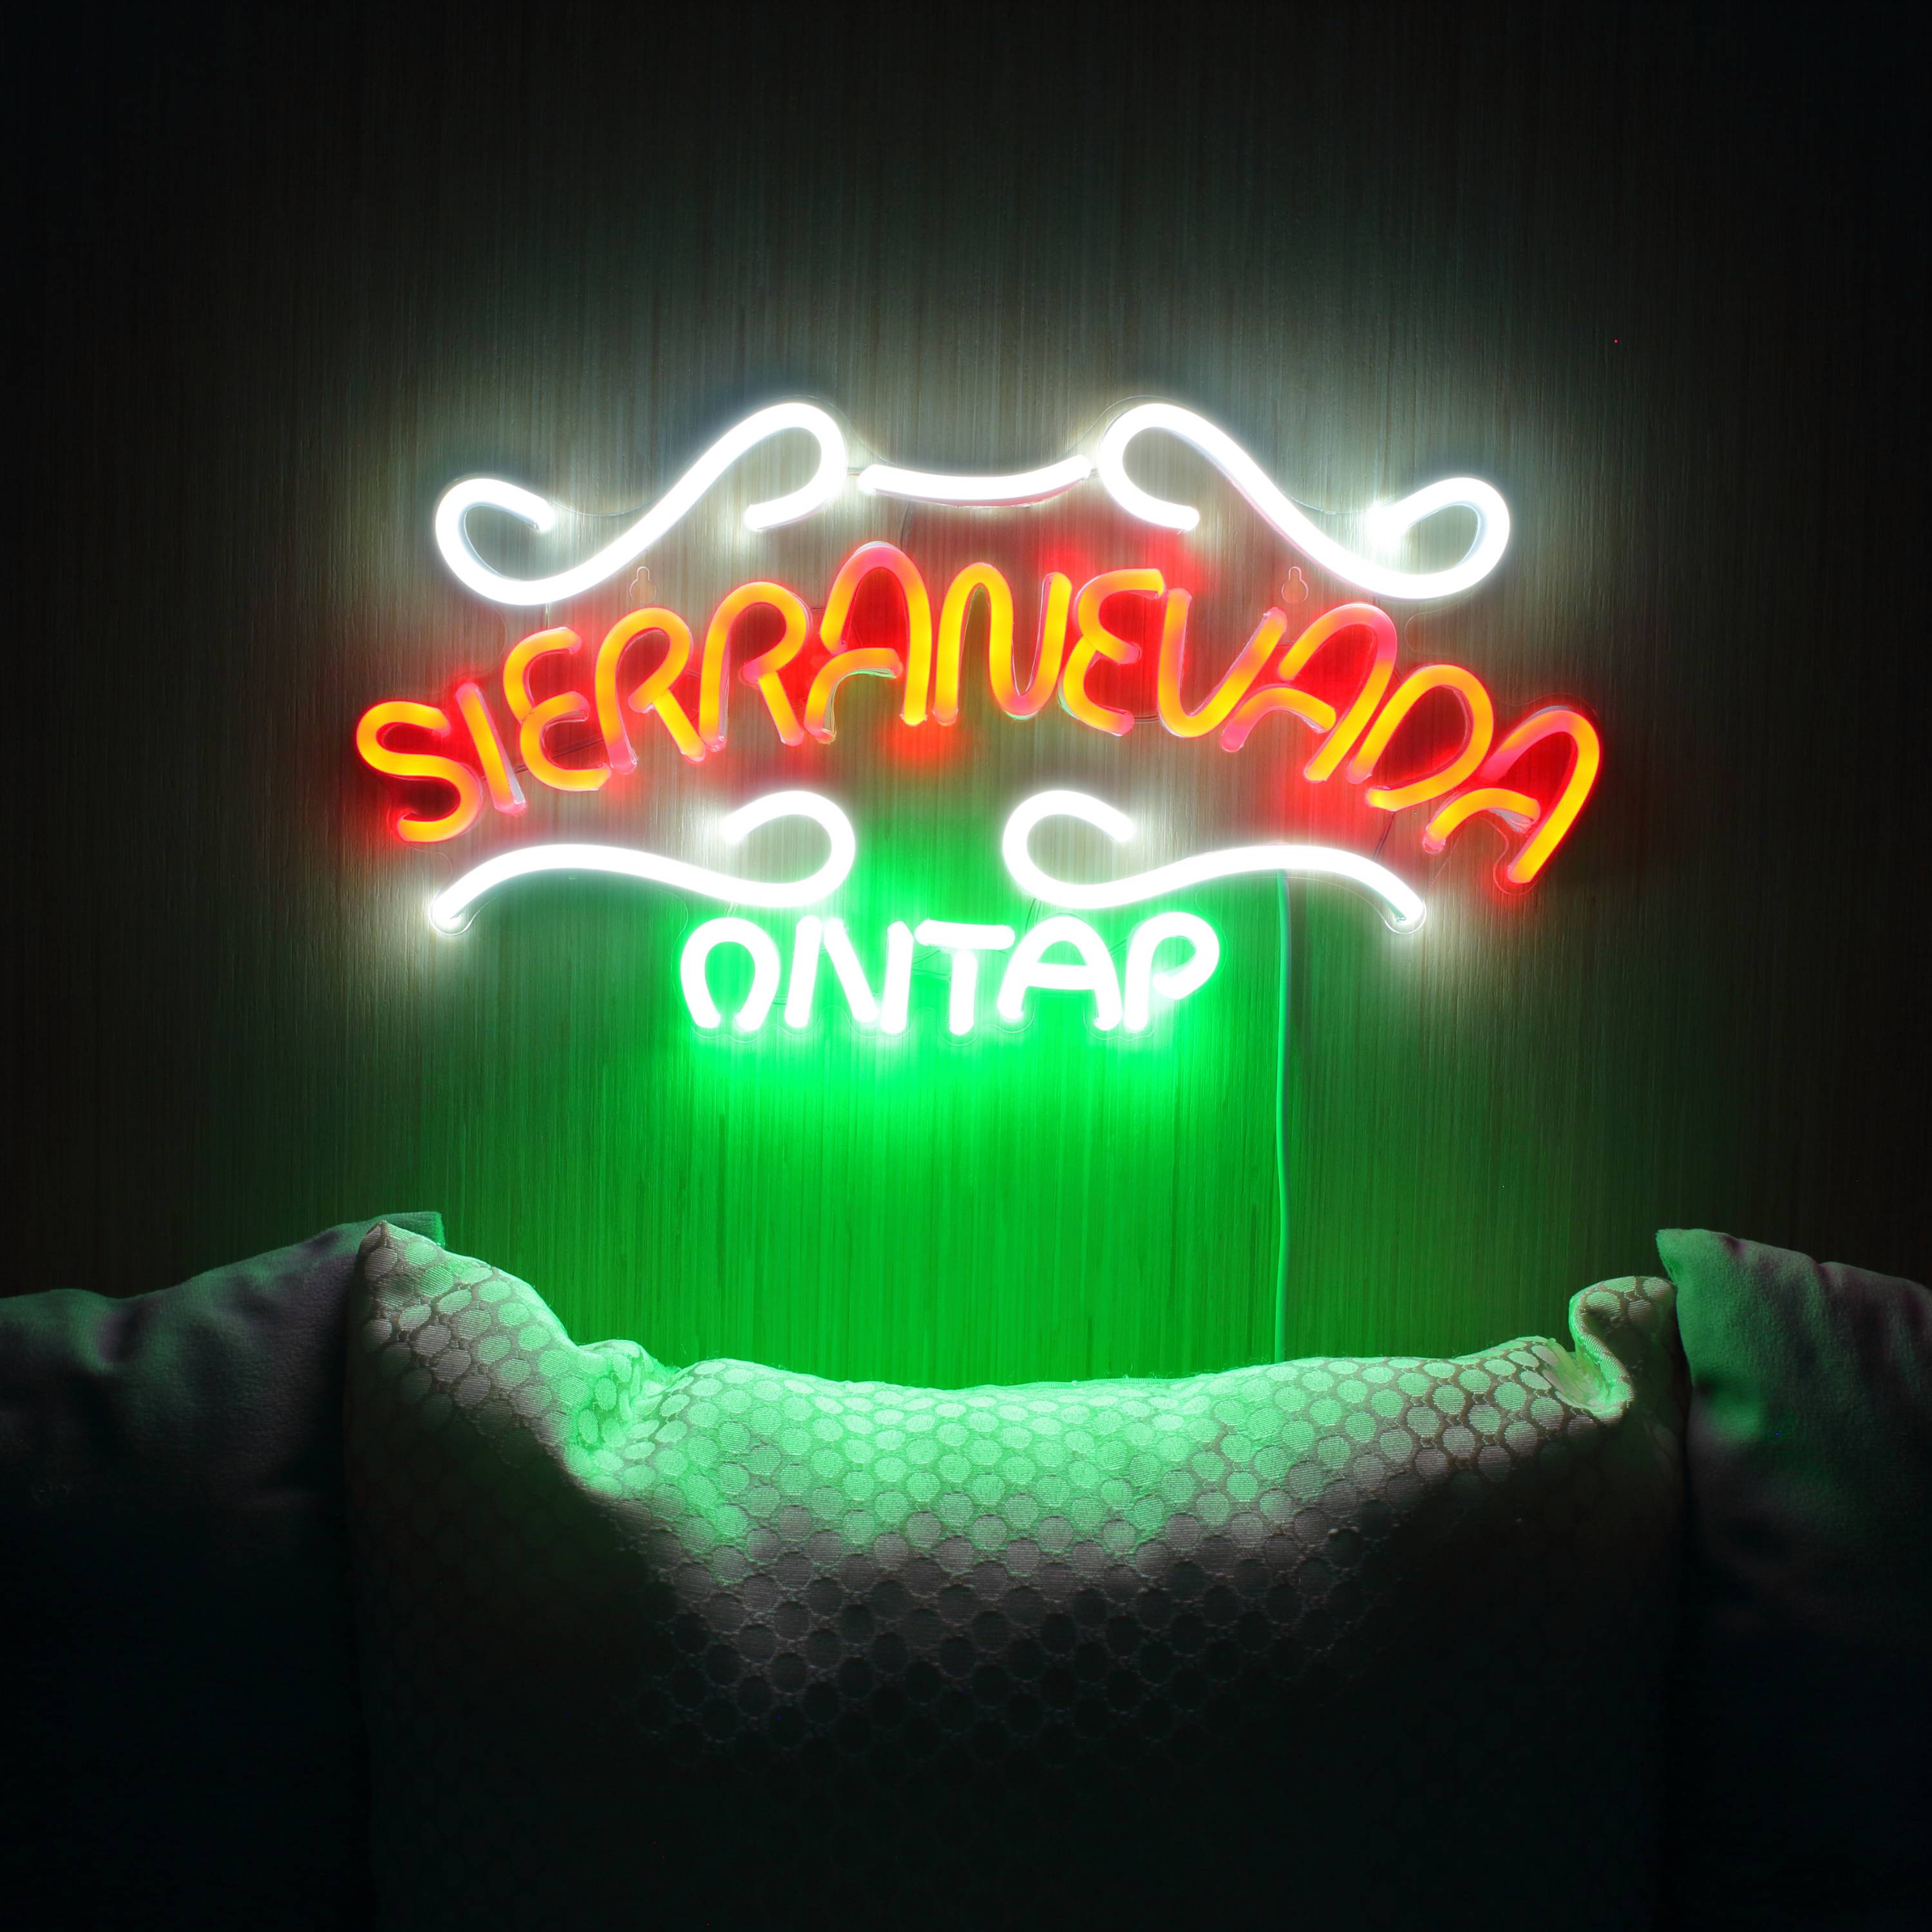 Sierranevada On Tap Large Flex Neon LED Sign